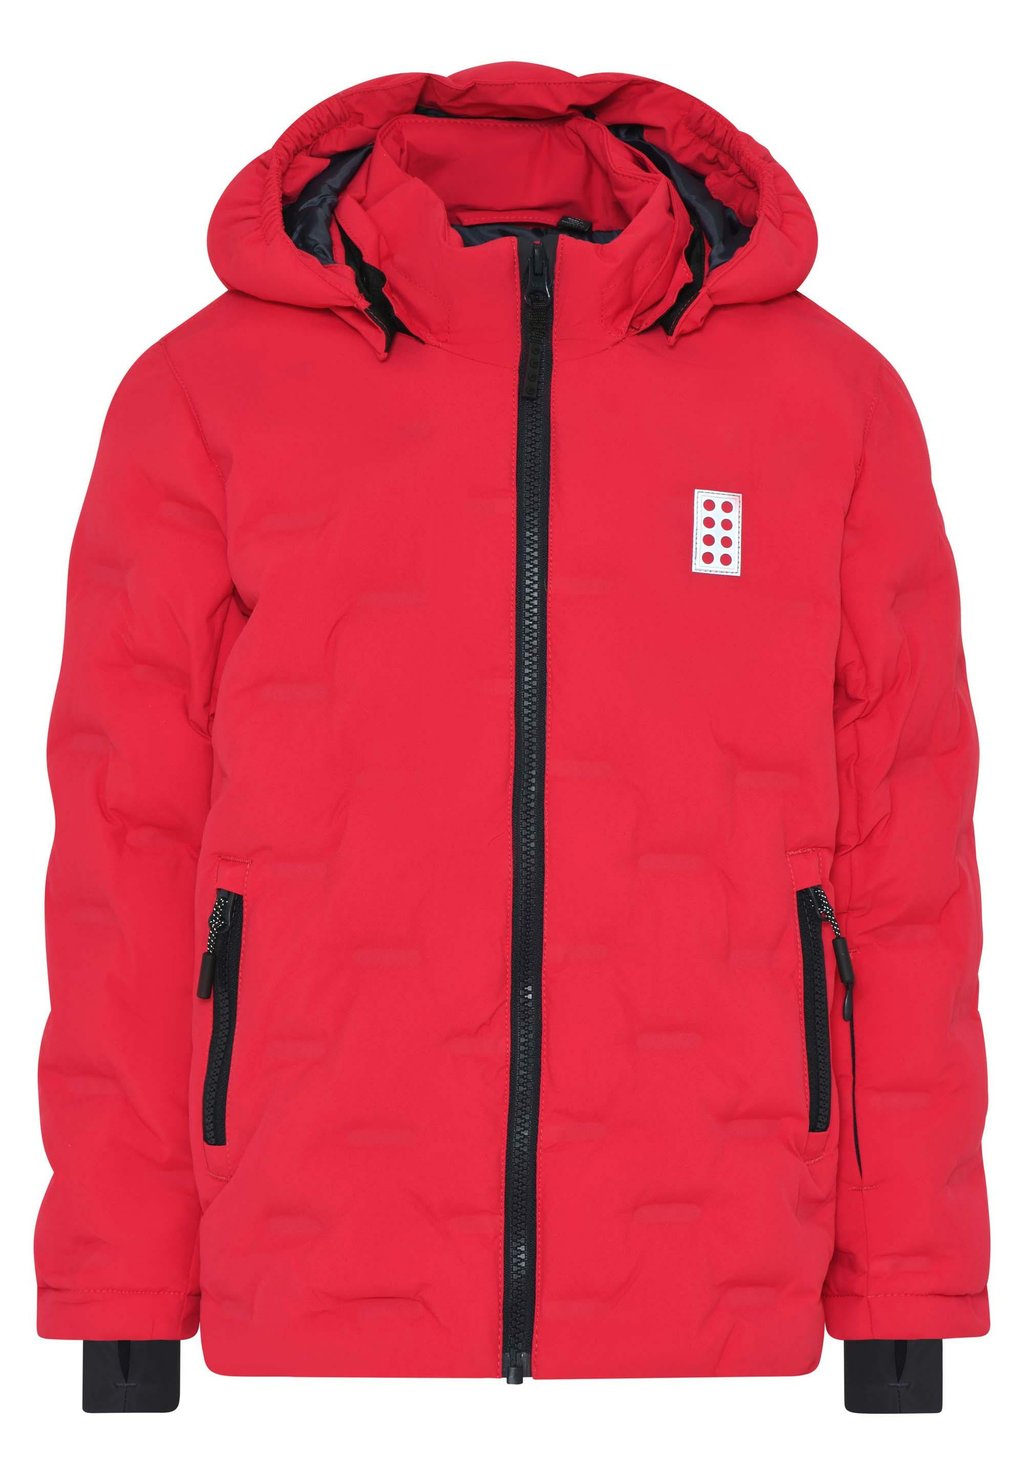 Зимняя куртка LEGO kidswear, цвет red